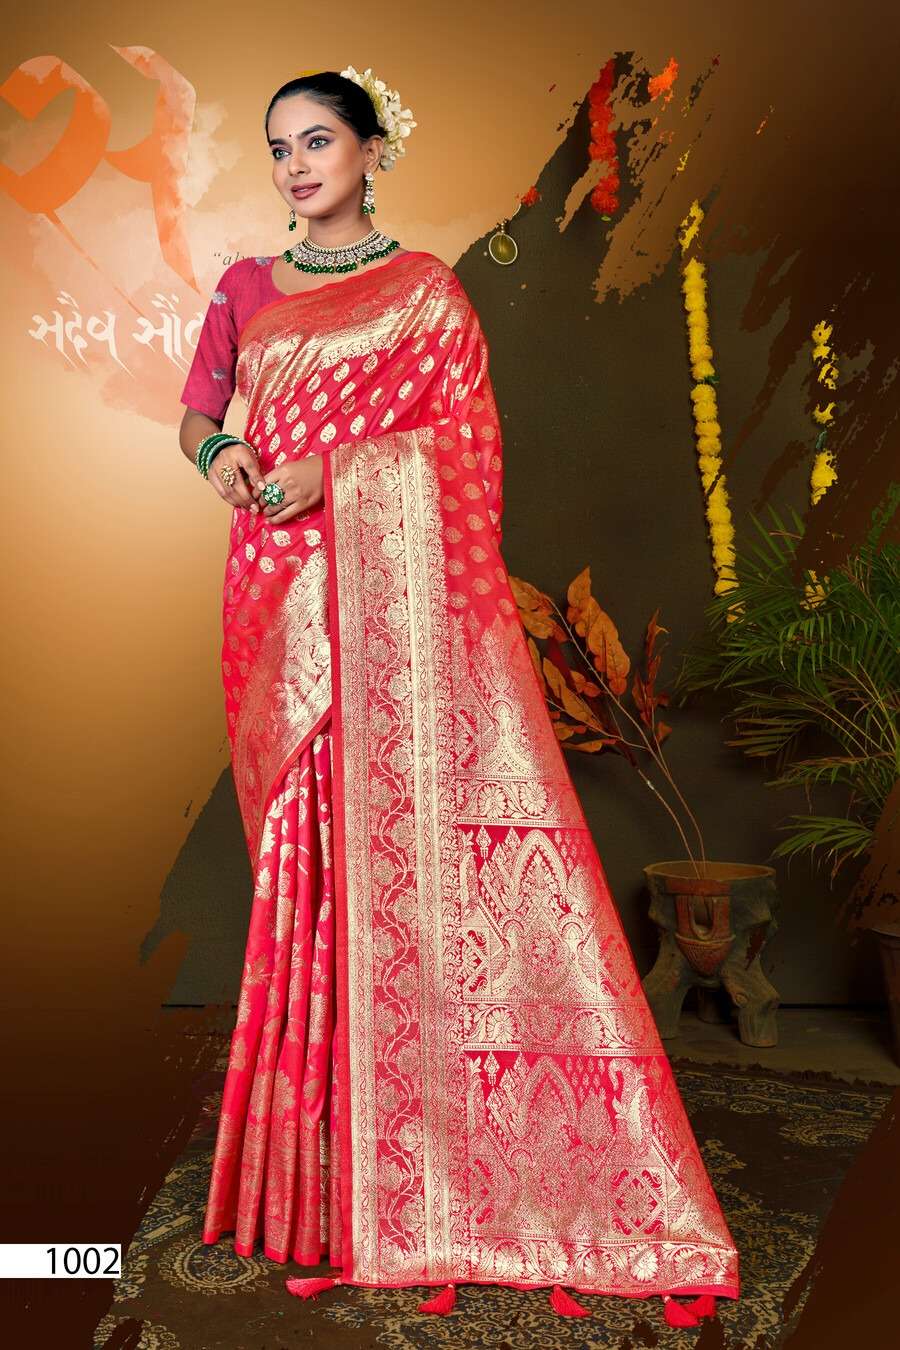 saroj saree Madhurima vol 1 heavy soft silk festive look saree catalog